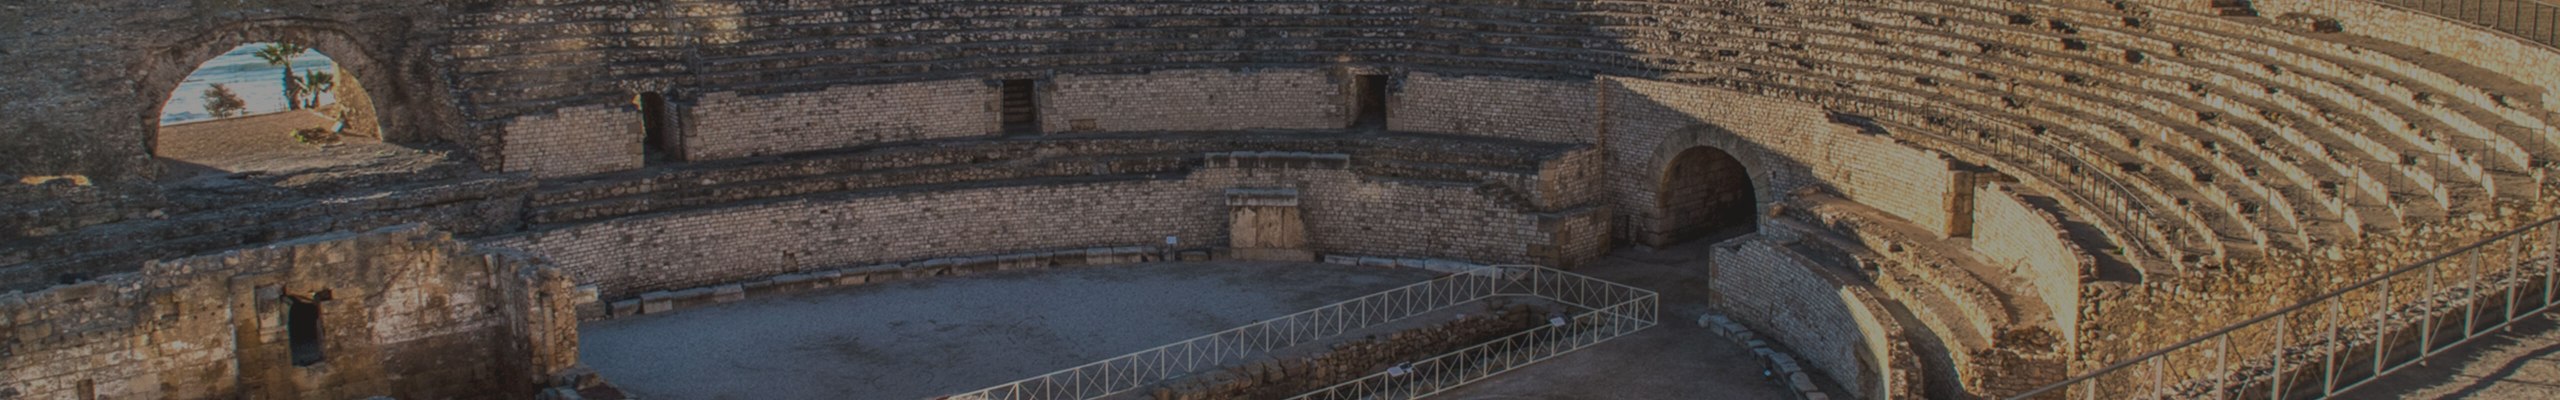 Die SEAT-Fans wählen Tarraco – Roman ruins